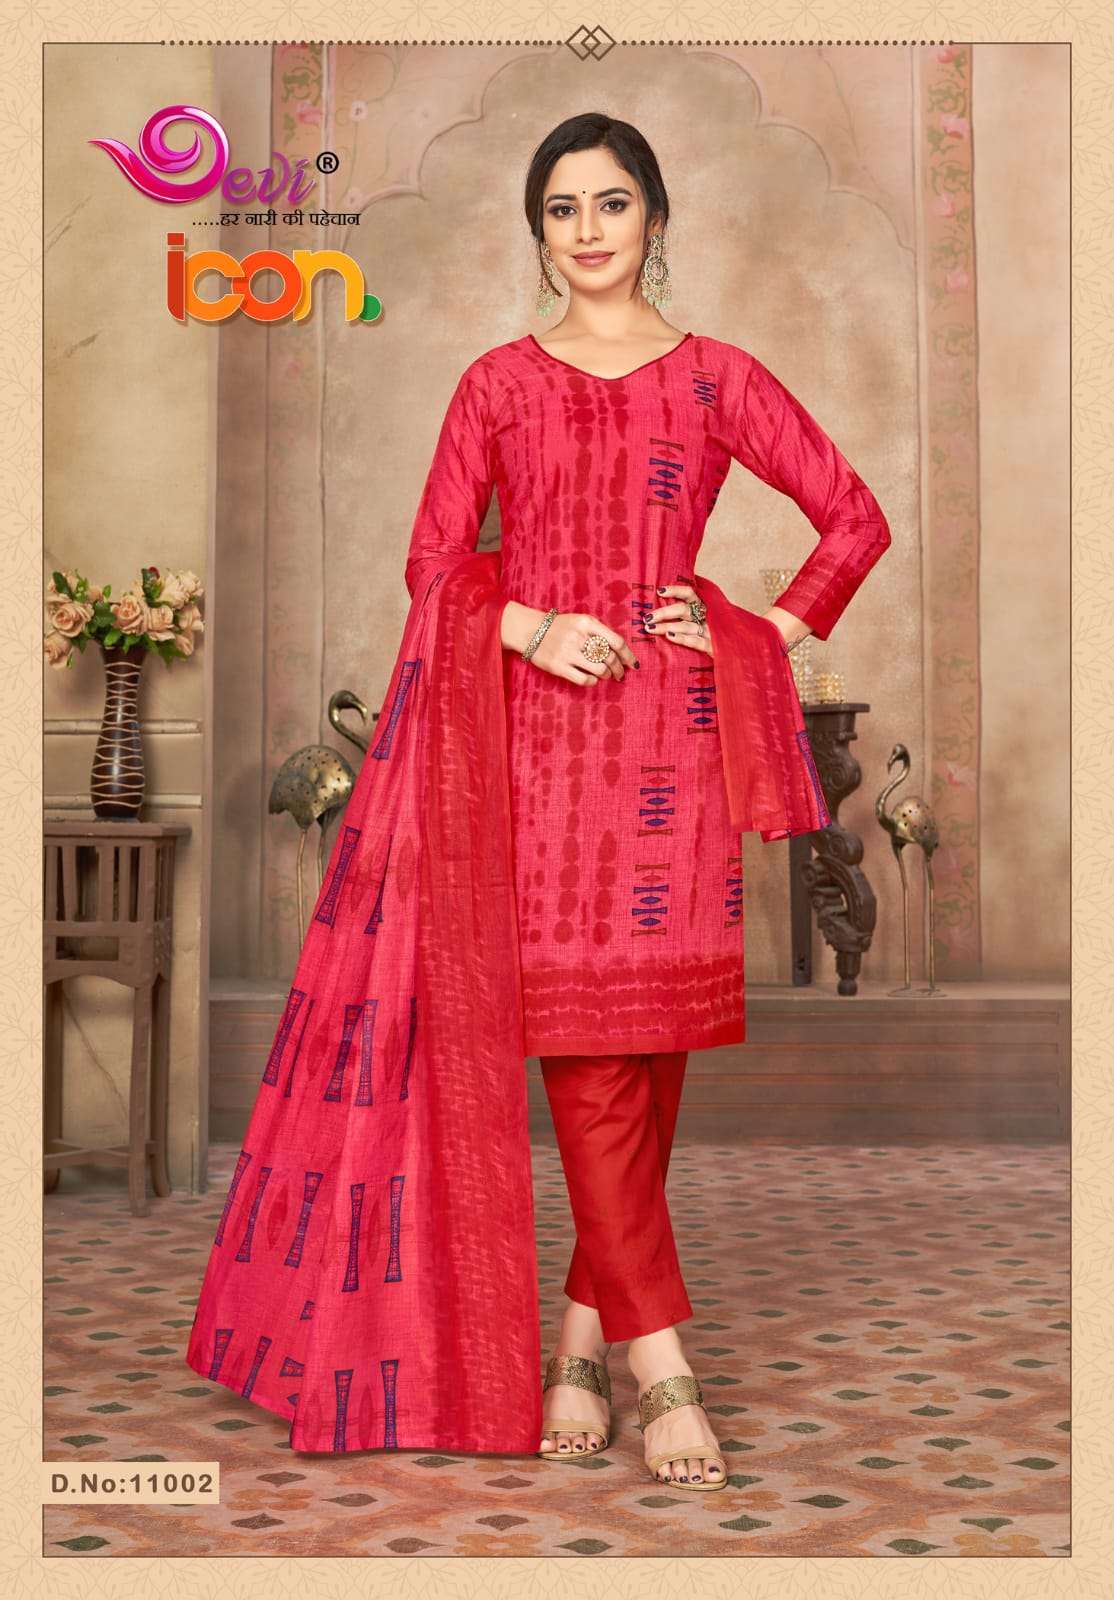 Devi Icon Vol 11 Catalog Summer Wear Pure Cotton Printed Unstitched Women Dress Materials 